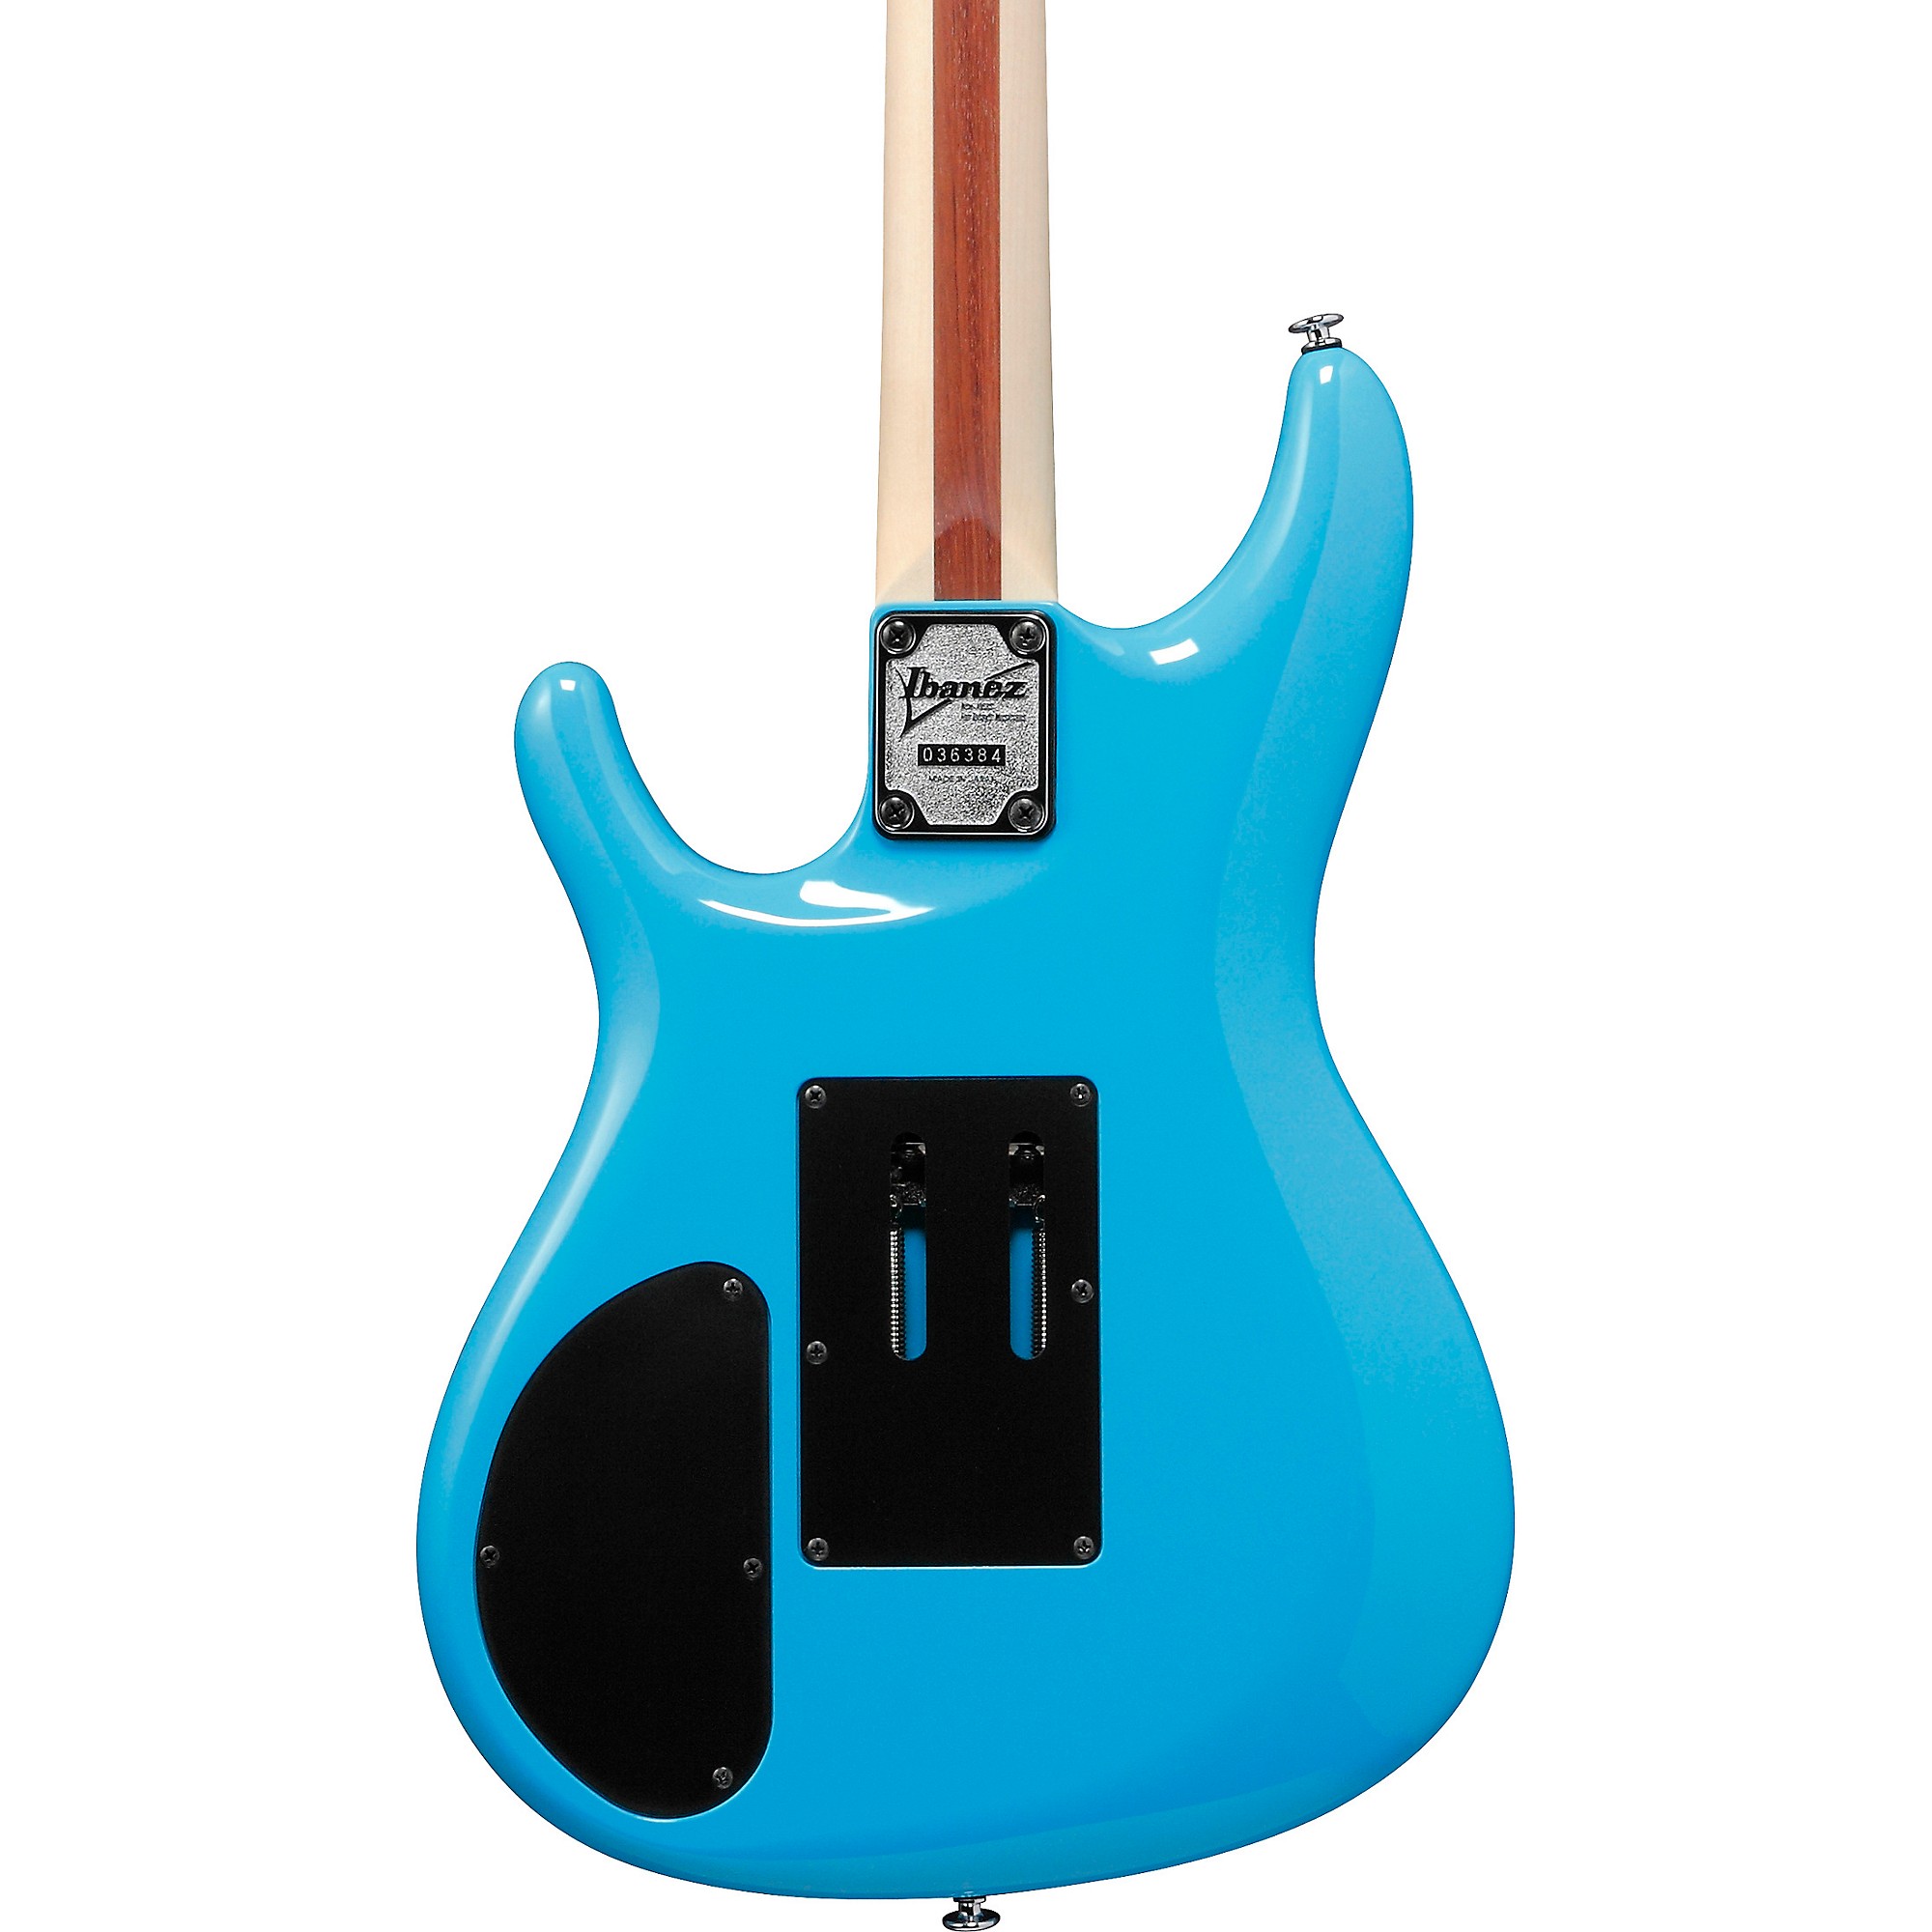 Ibanez JS2410 Joe Satriani Signature электрогитара небесно-голубого цвета ibanez js20 s joe satriani signature подписная электрогитара с кейсом